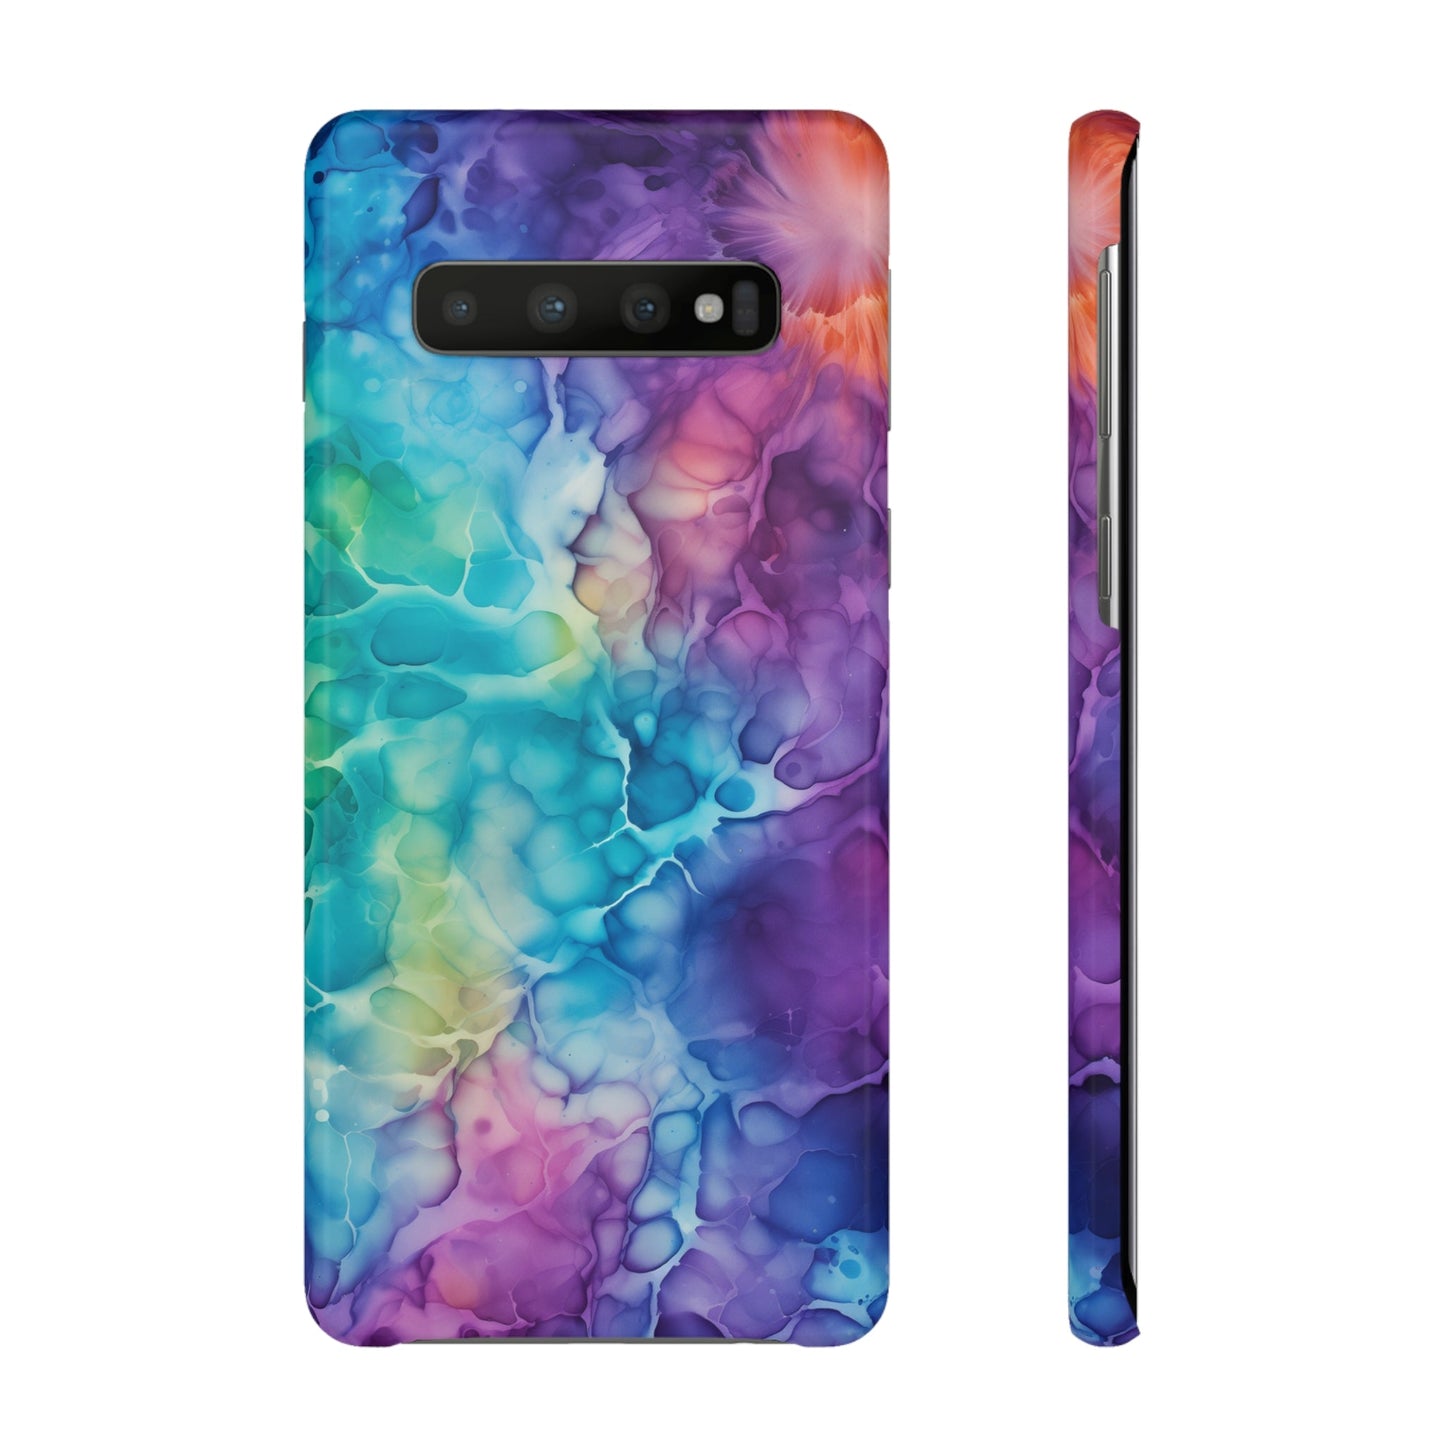 Nebula Fusion | Snap Case